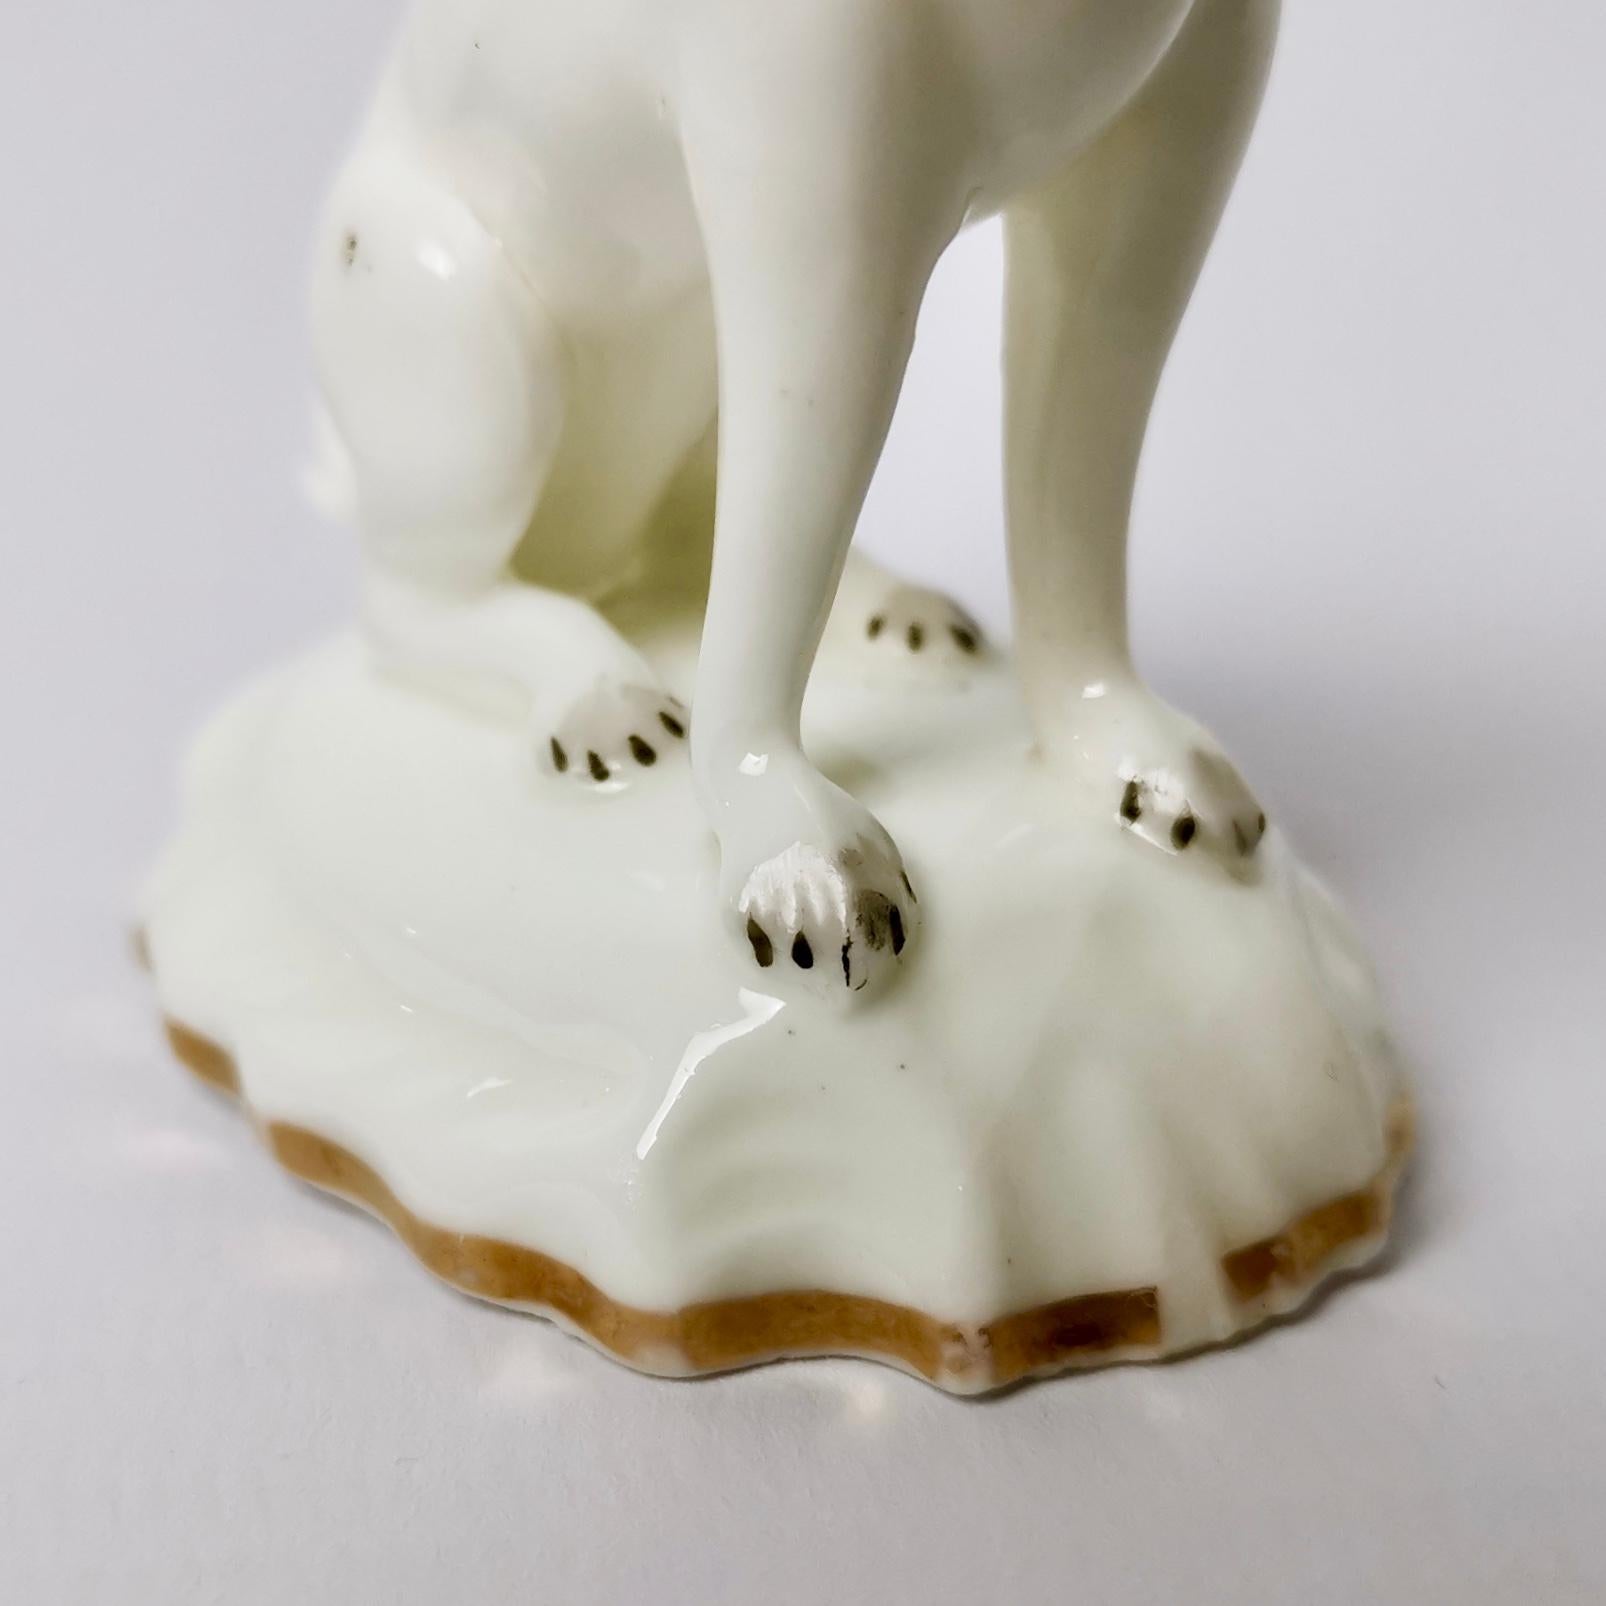 Mid-19th Century Rockingham Porcelain Pug Dog, White, Rococo Revival, circa 1835